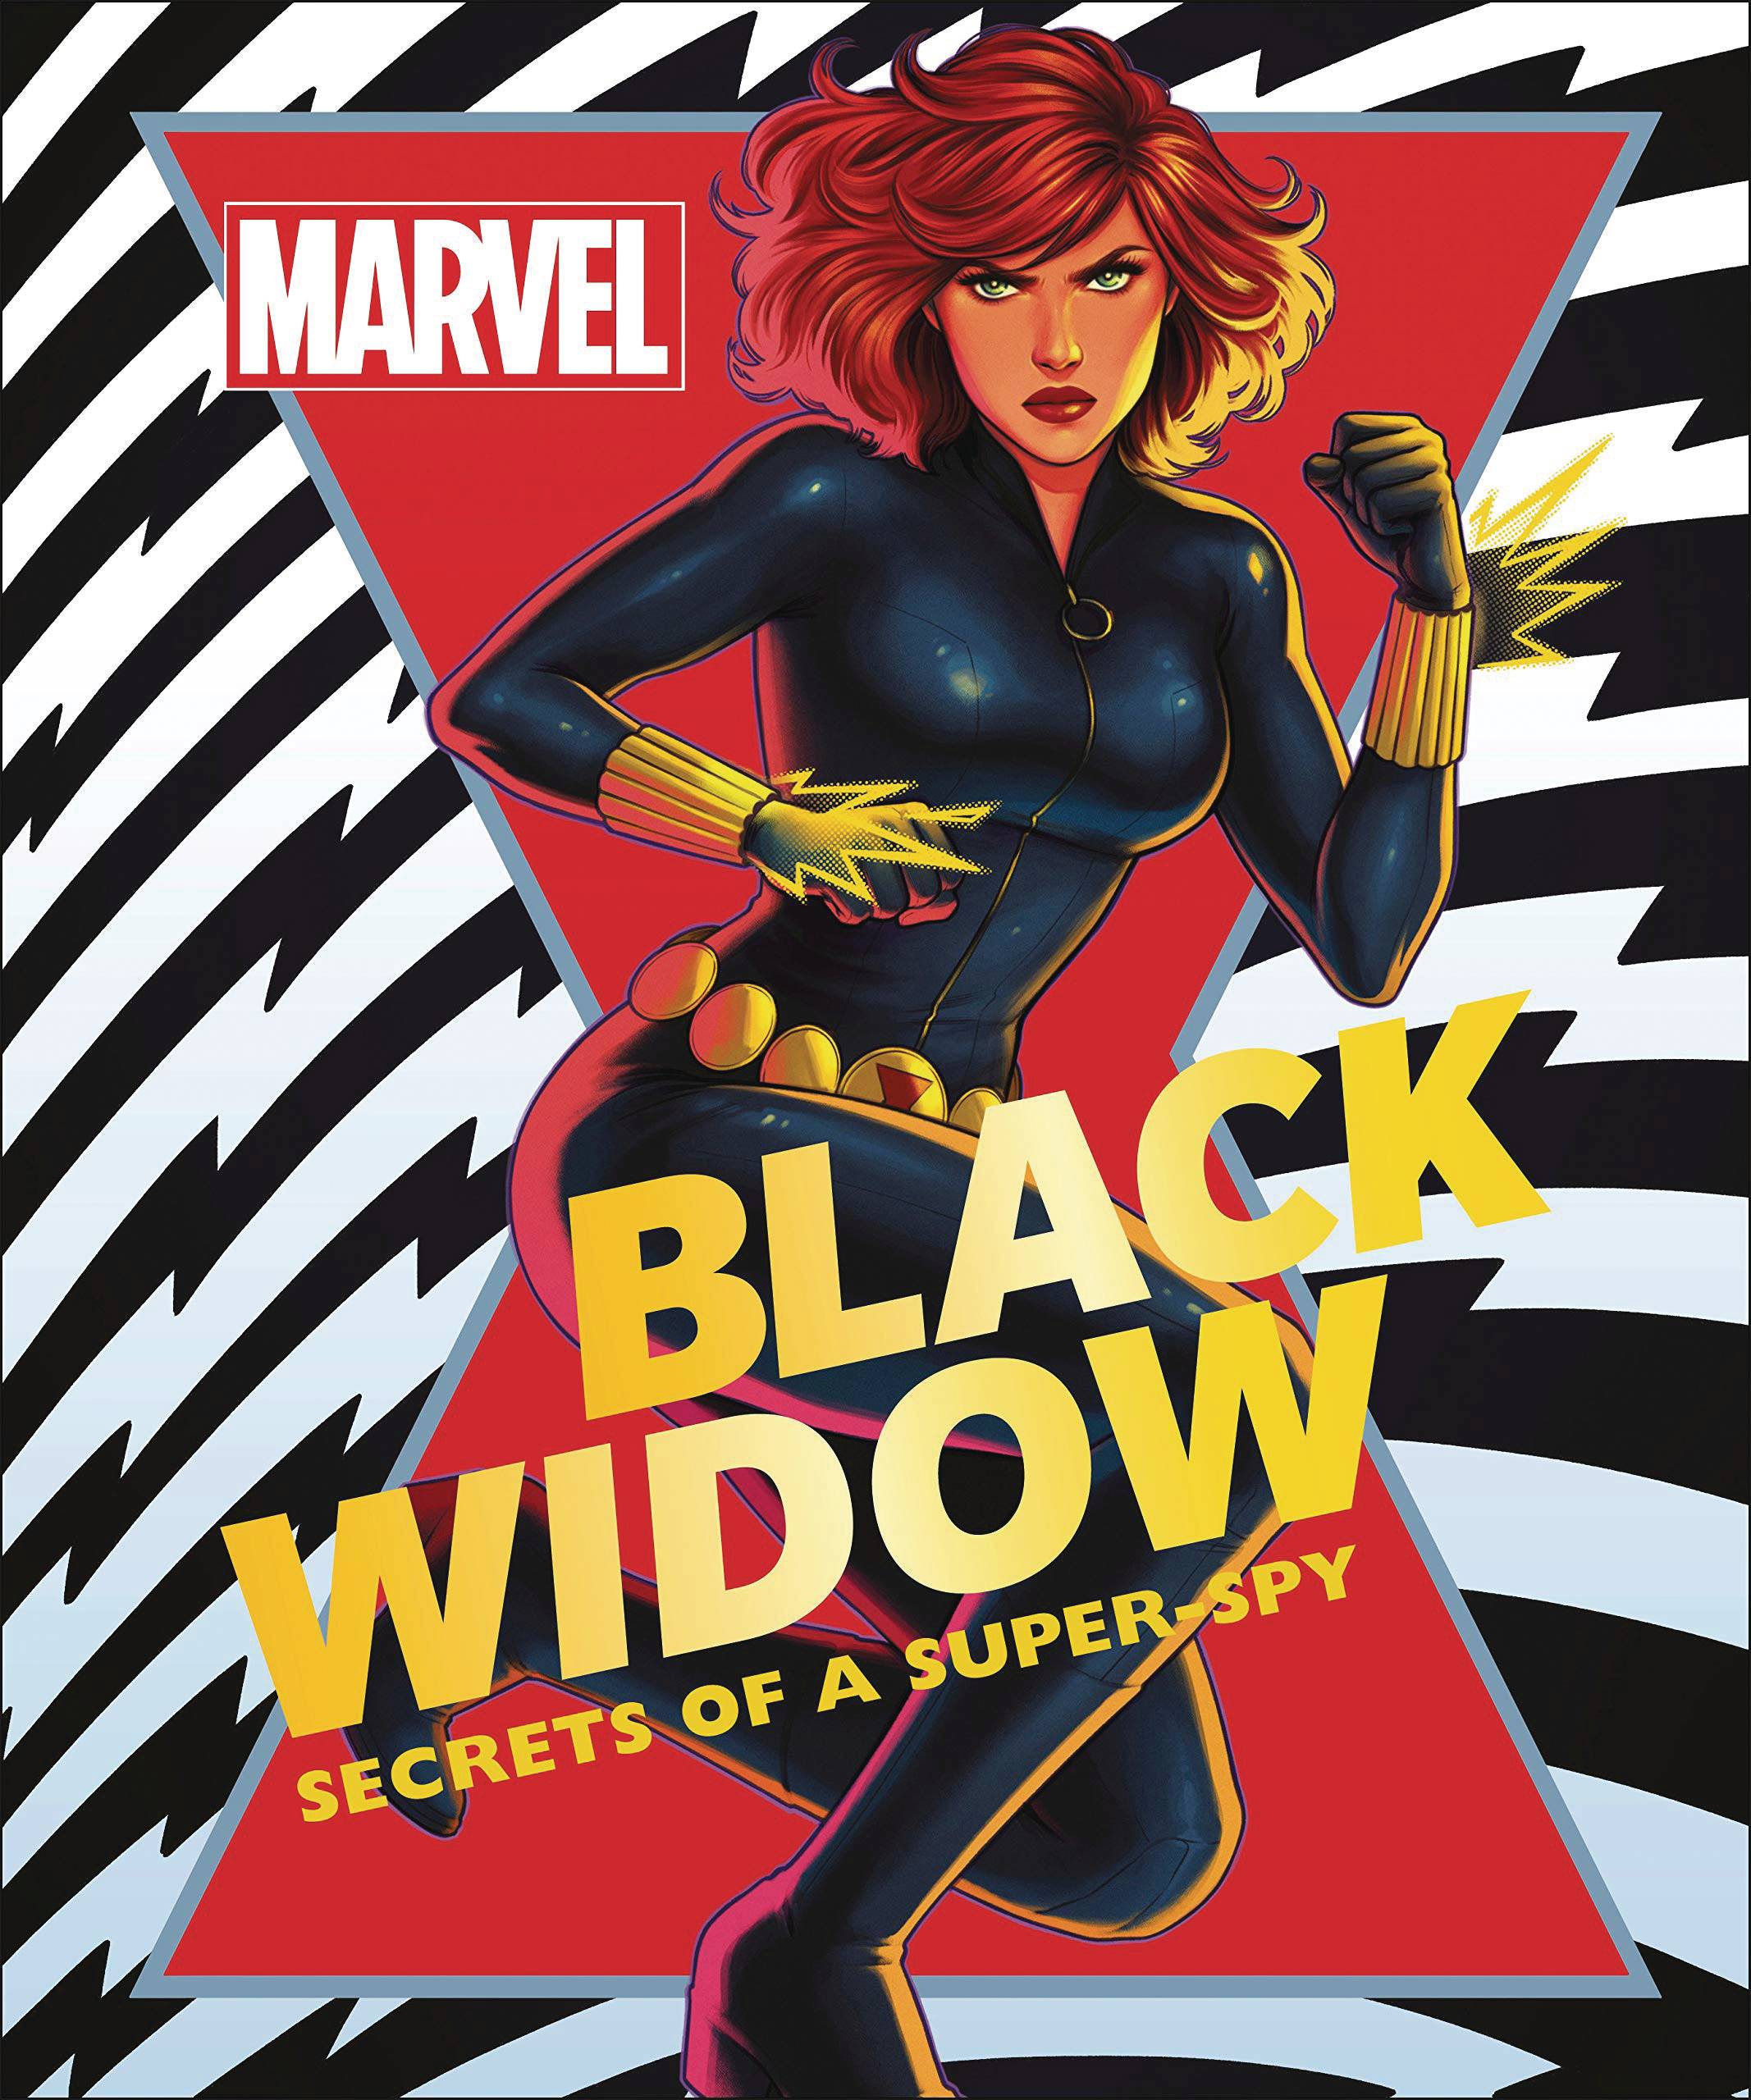 Marvel Black Widow Secrets of Super Spy Hardcover